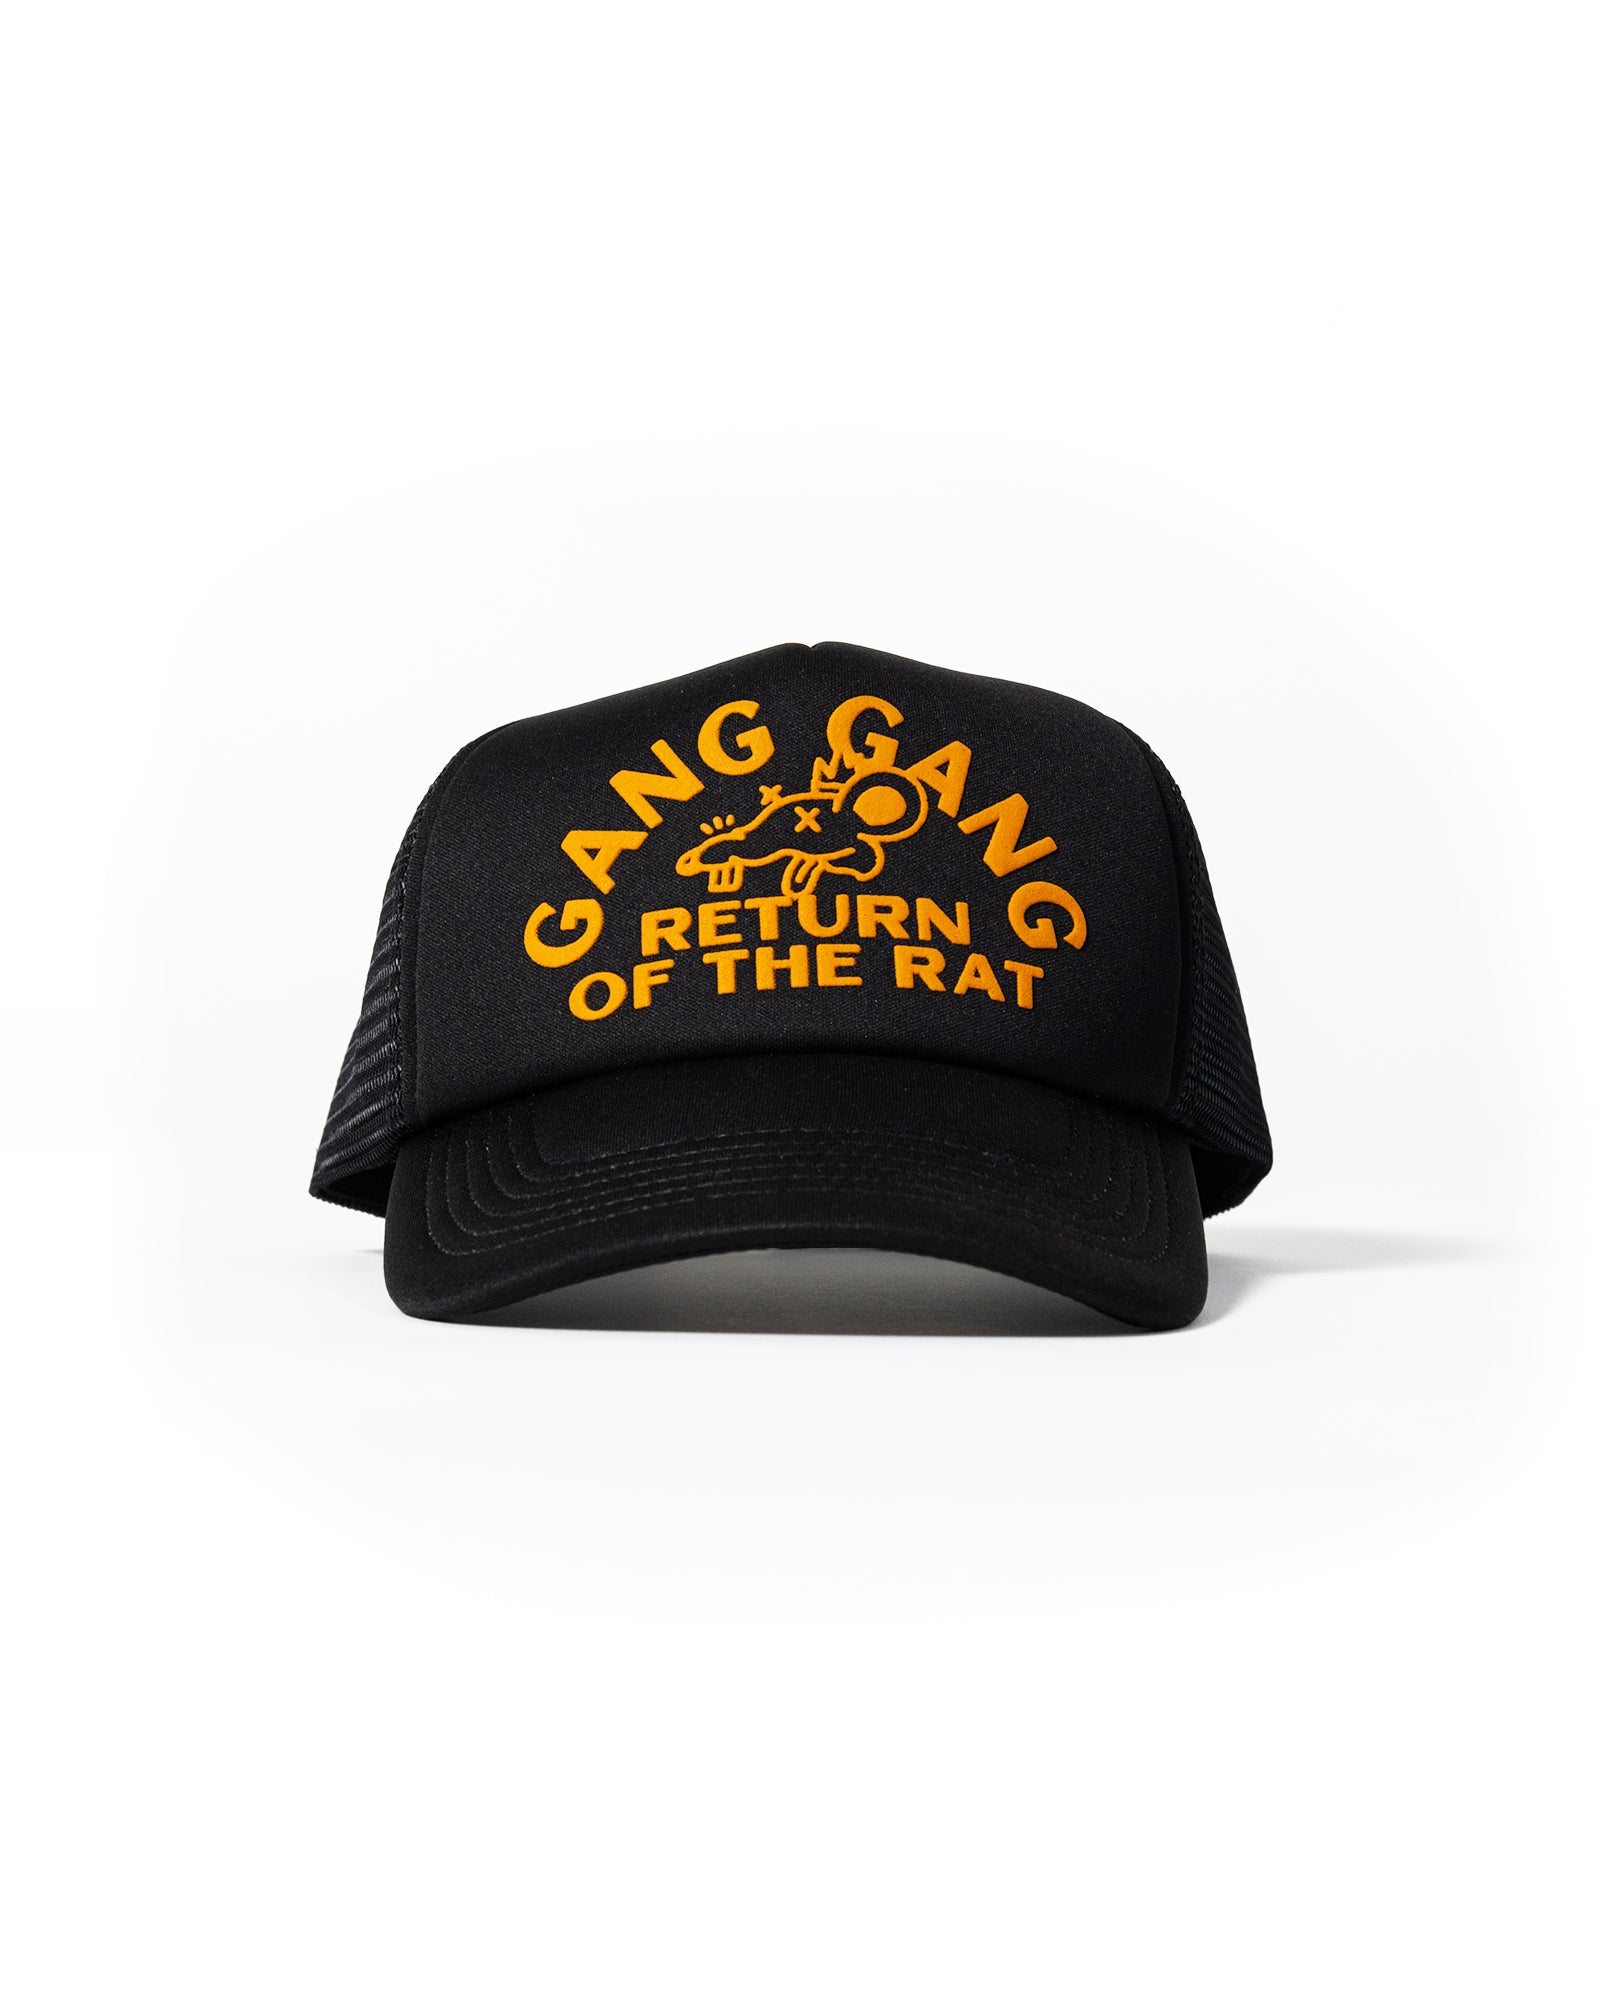 Return of The Rat Black Trucker Hat